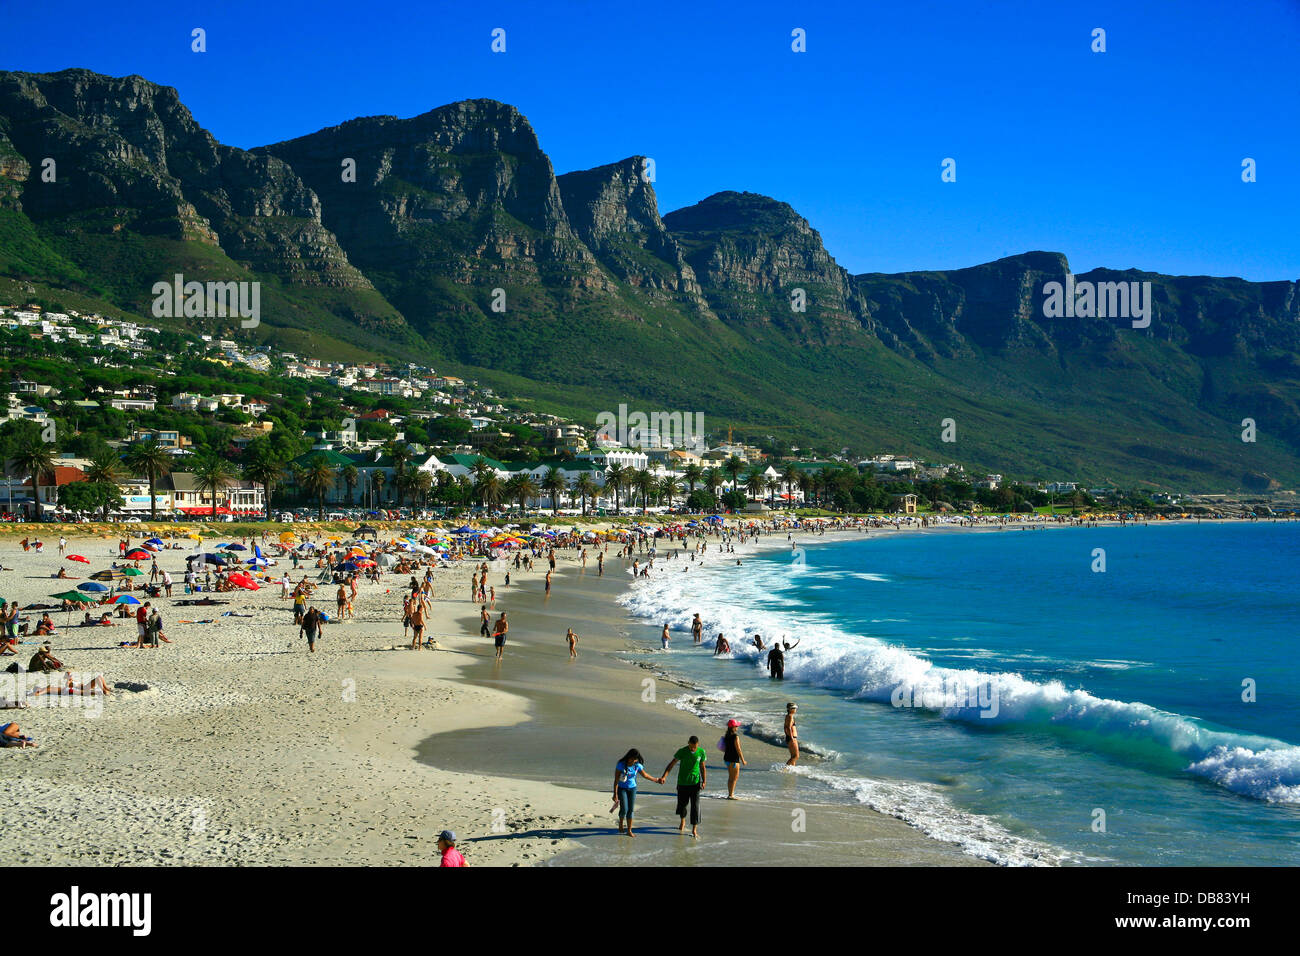 Südafrika - Kapstadt - Camps Bay Strand Atlantik Berge 12 Apostel Vorstadt Sand Leute sitzen am Strand Küste Stockfoto